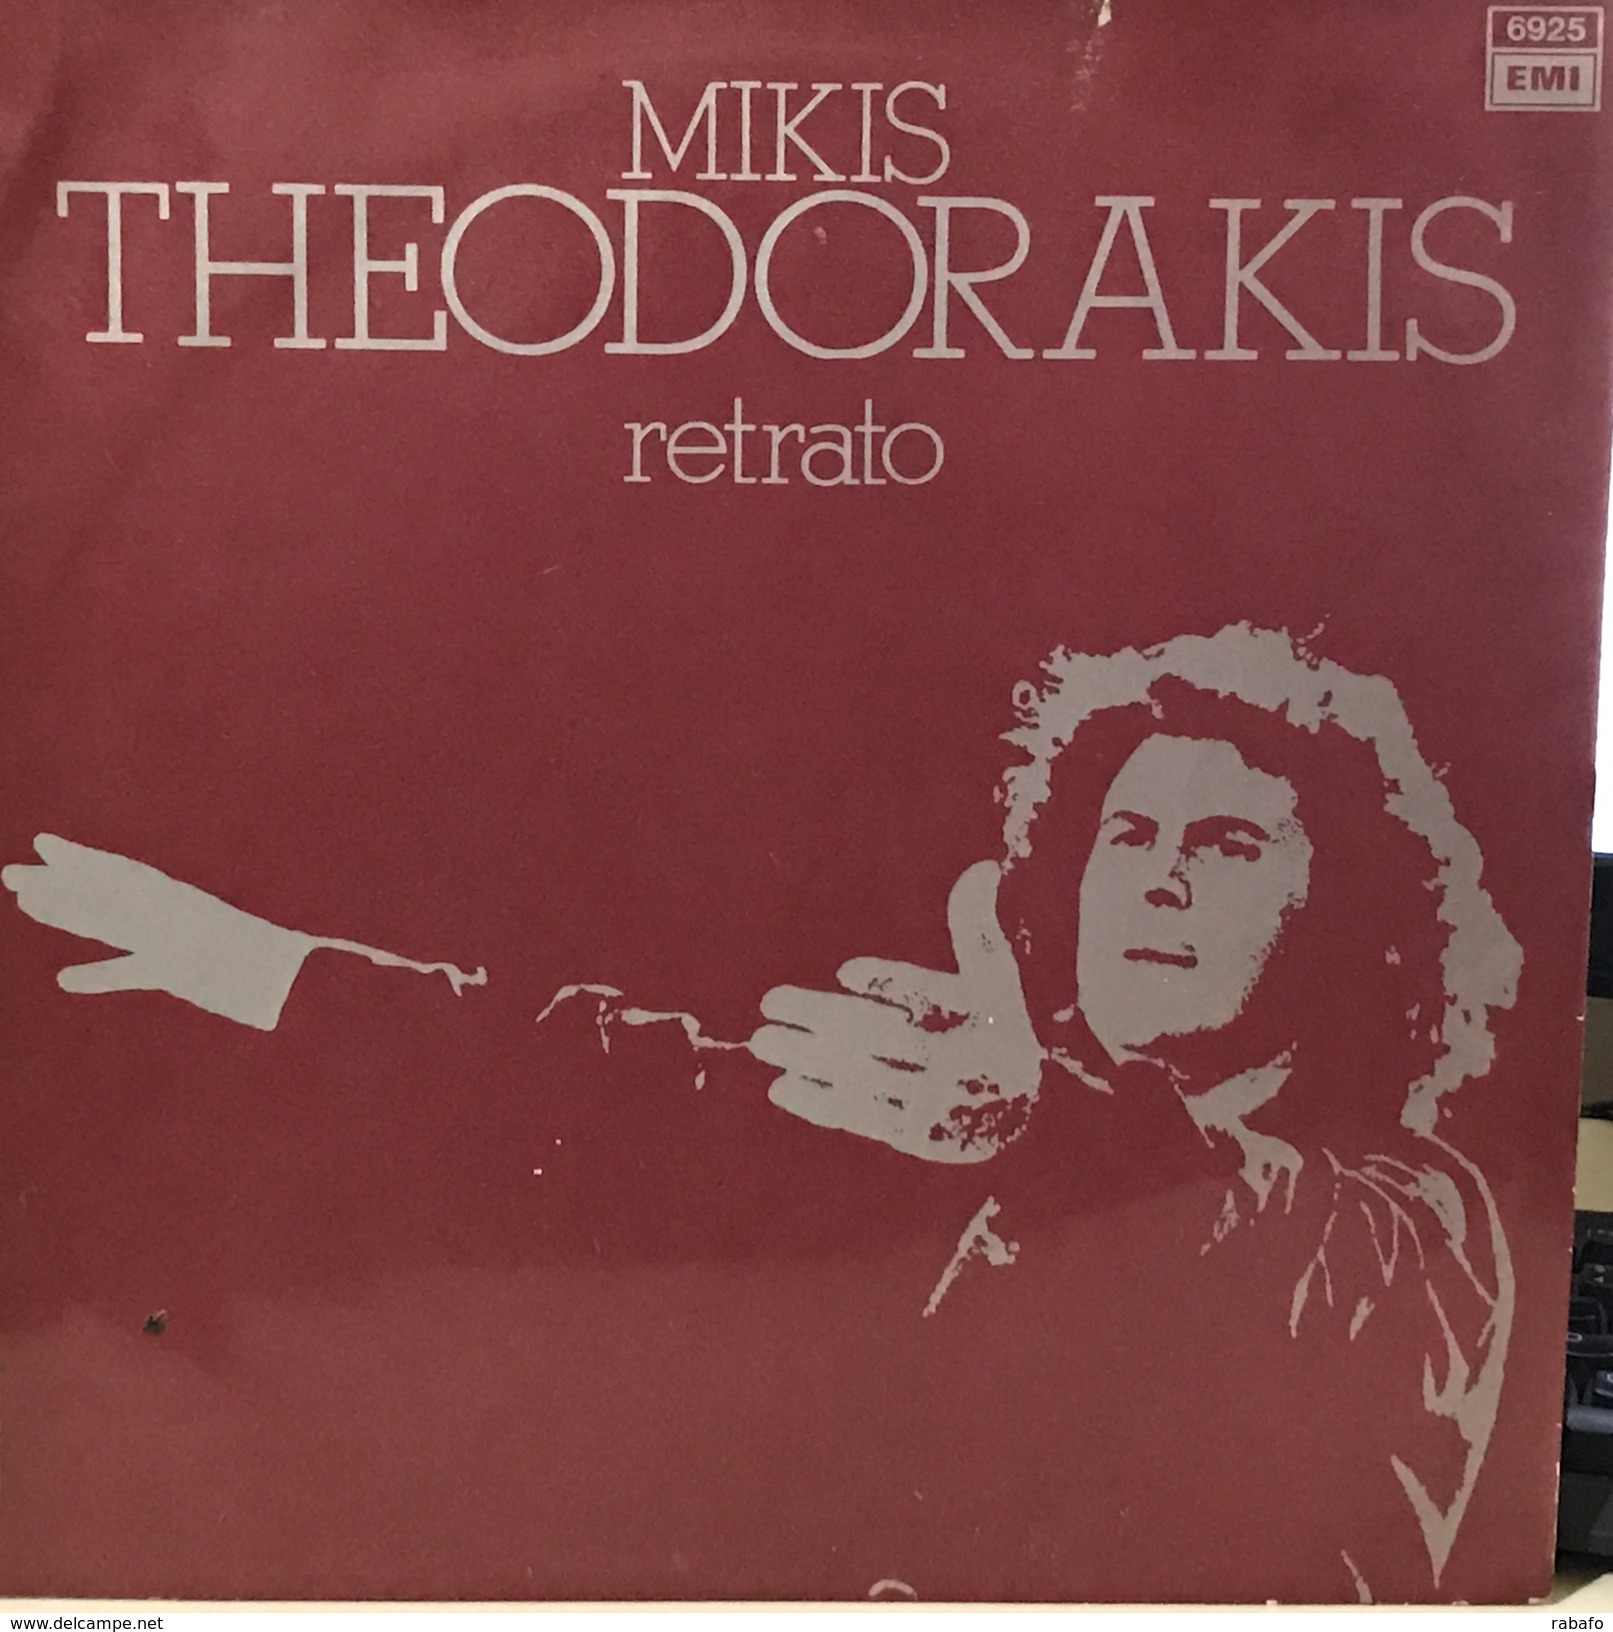 LP Argentino De Mikis Theodorakis Año 1978 - World Music